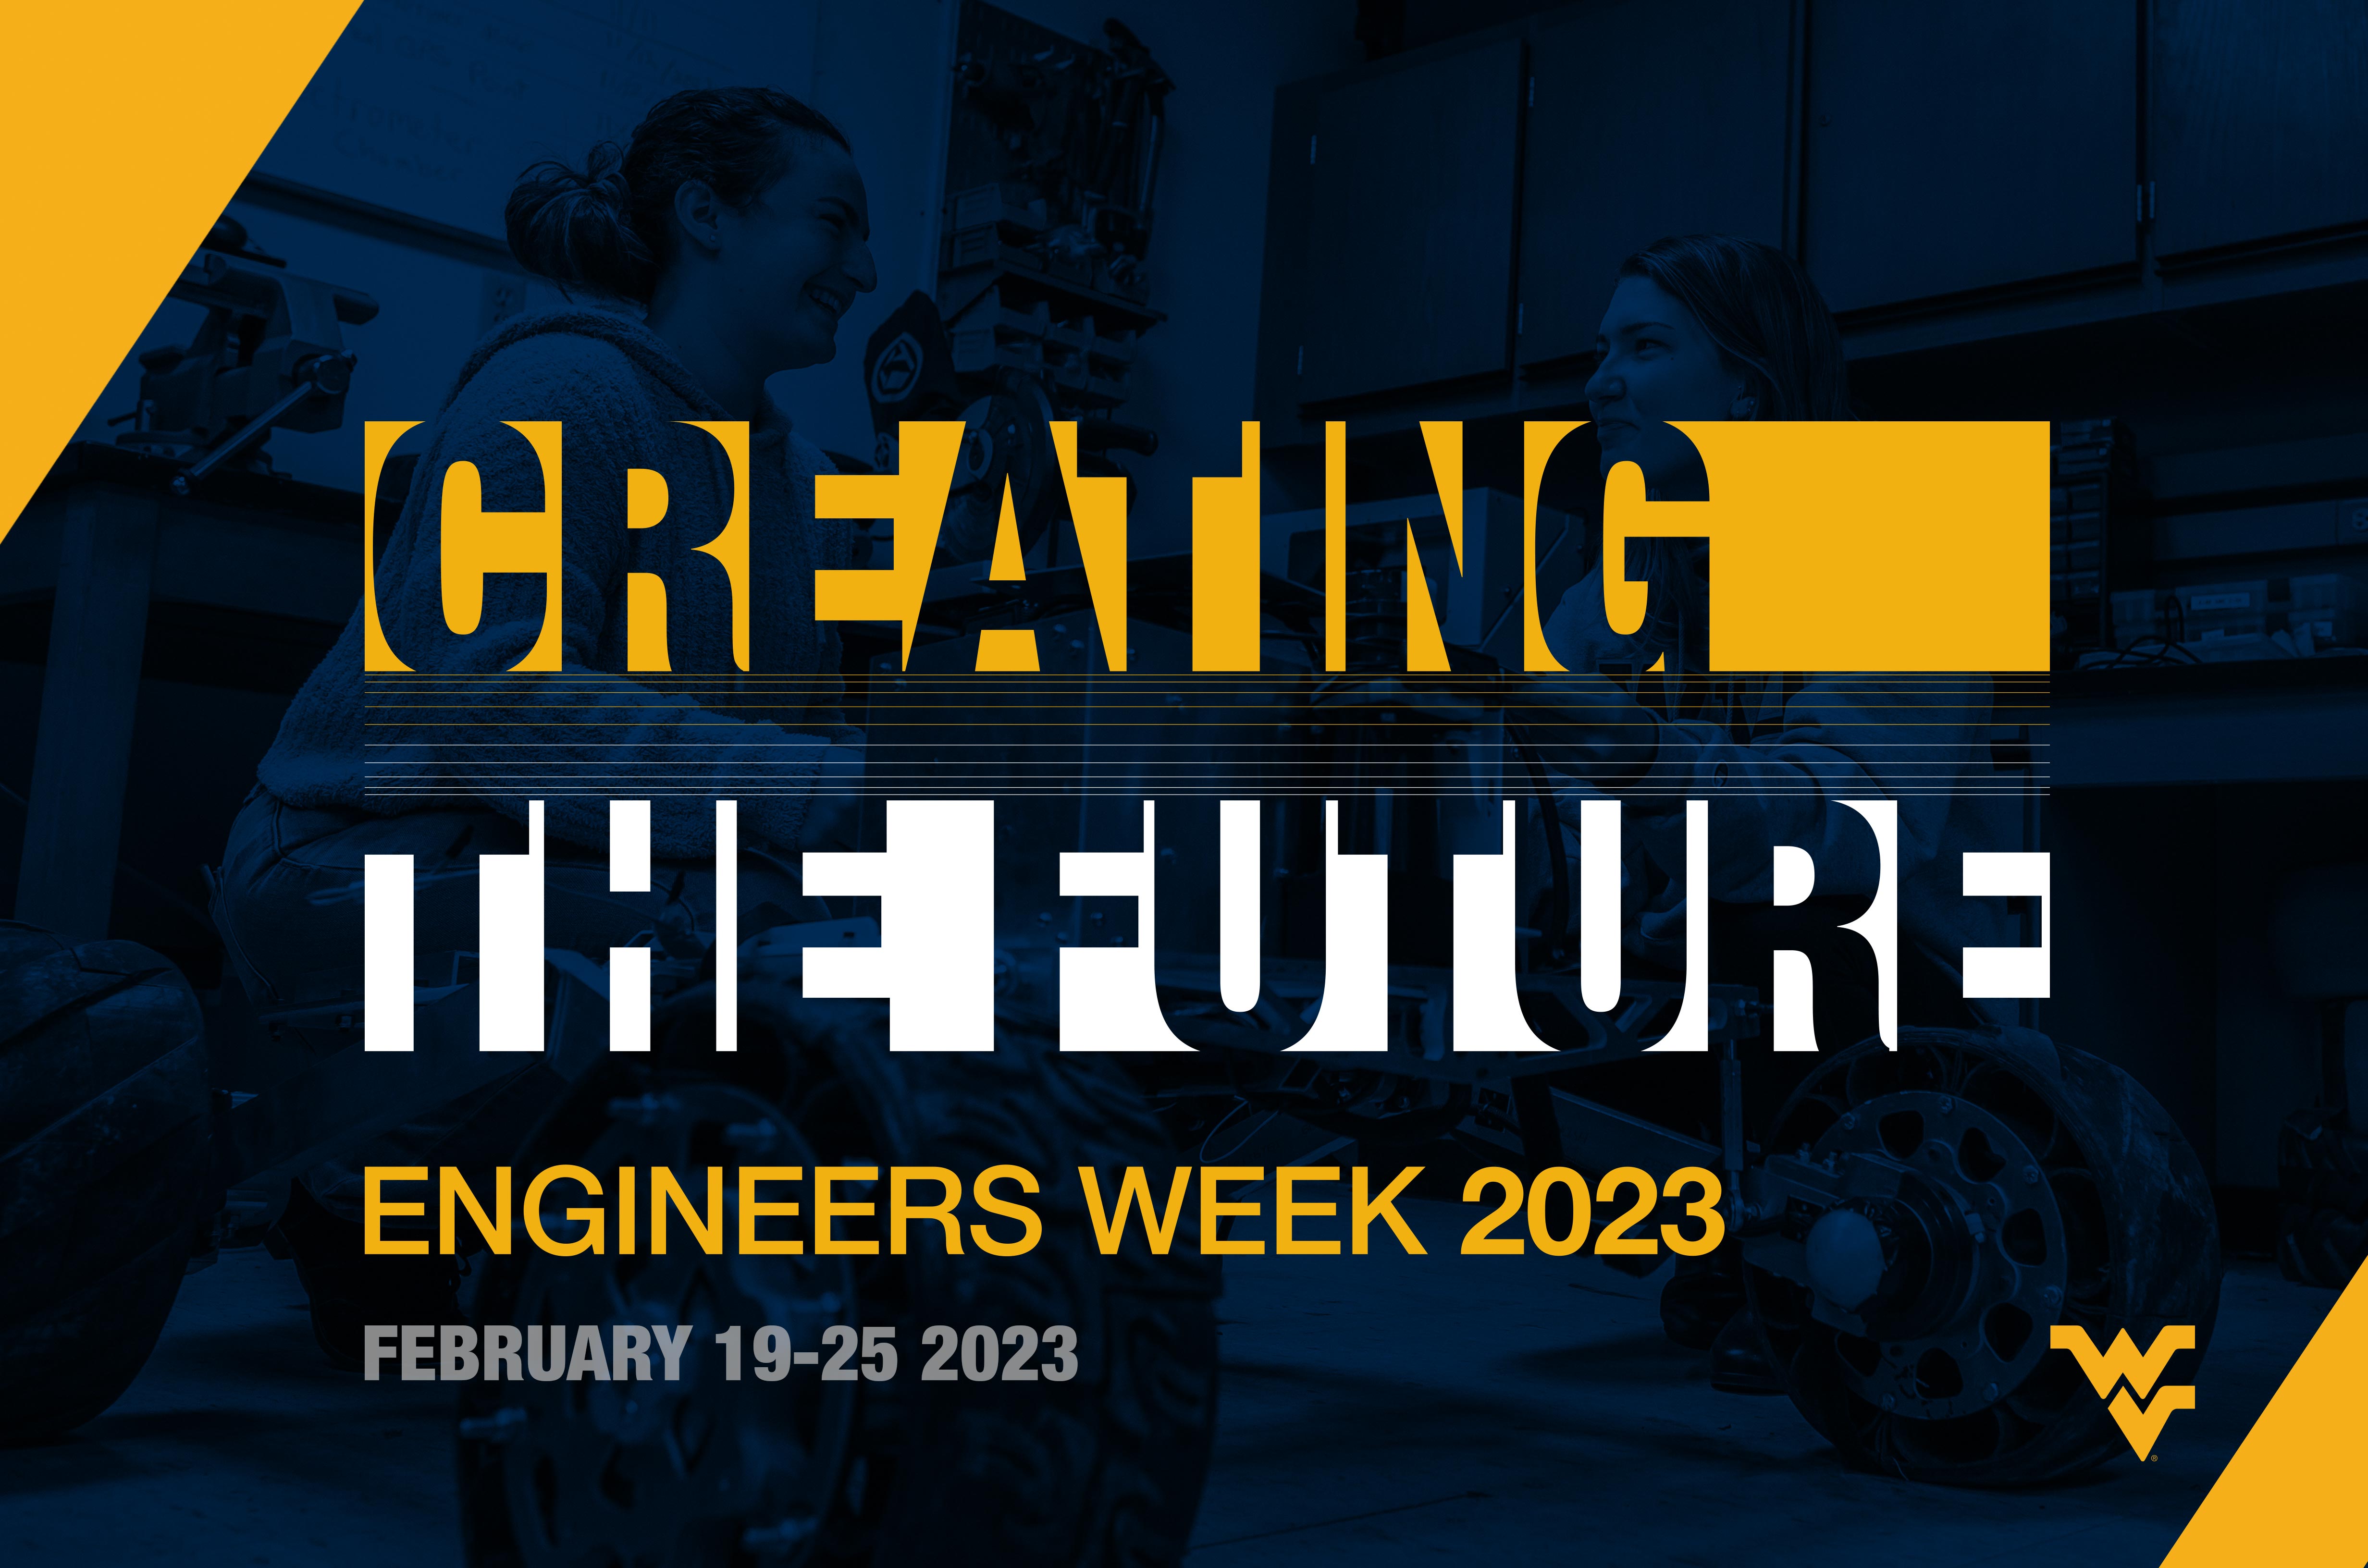 Creating the future - Engineers Week 2023 - February 19-25, 2023